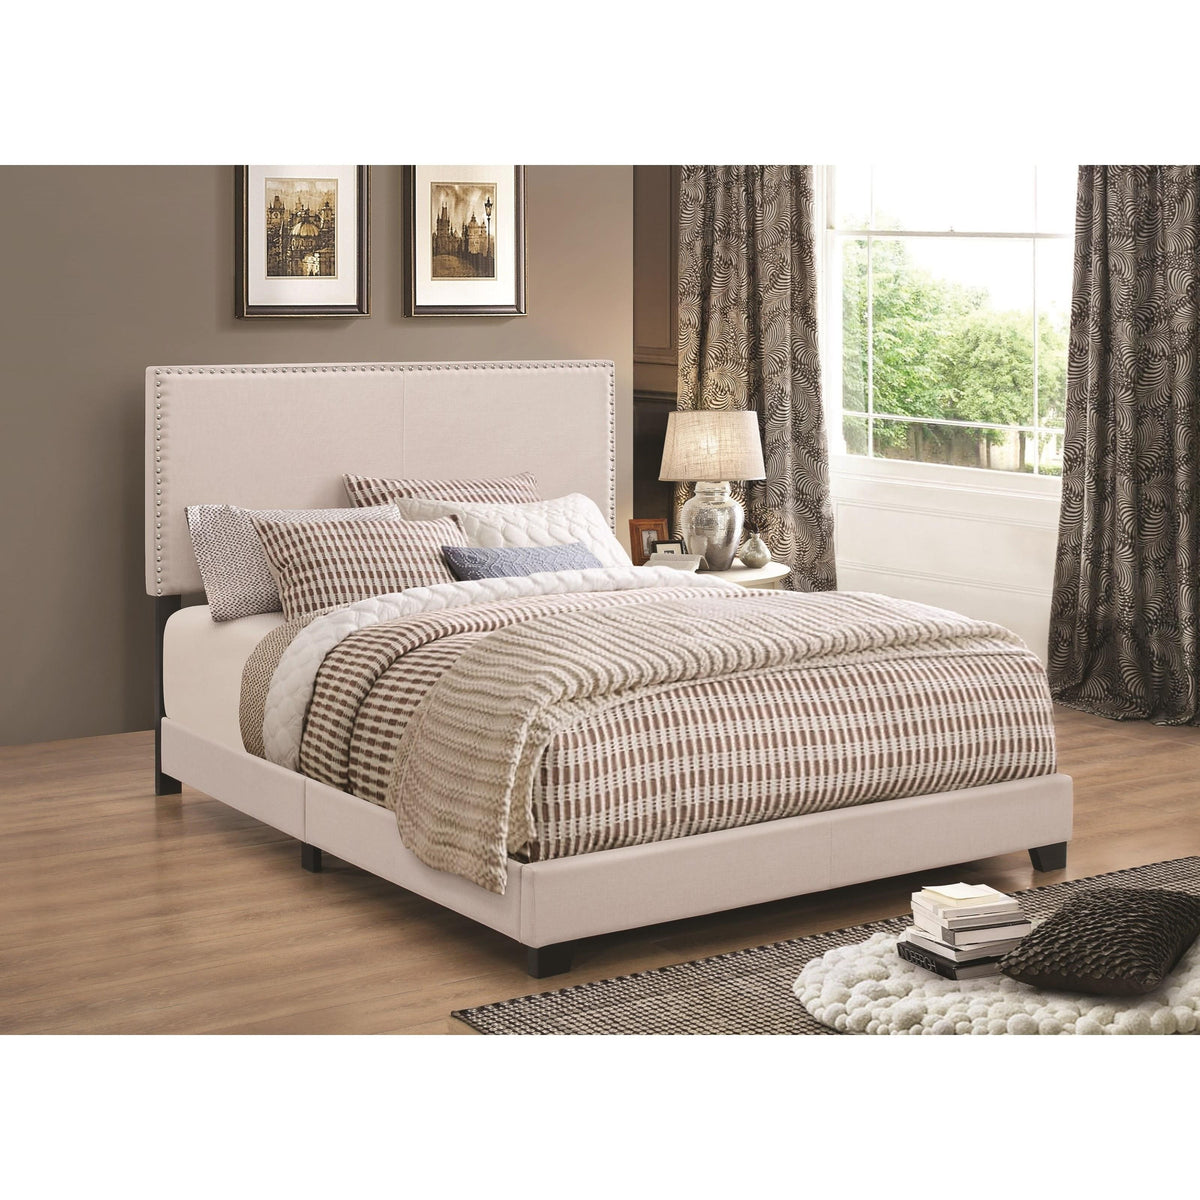 BM172144 Modern Panel Twin Bed, Ivory